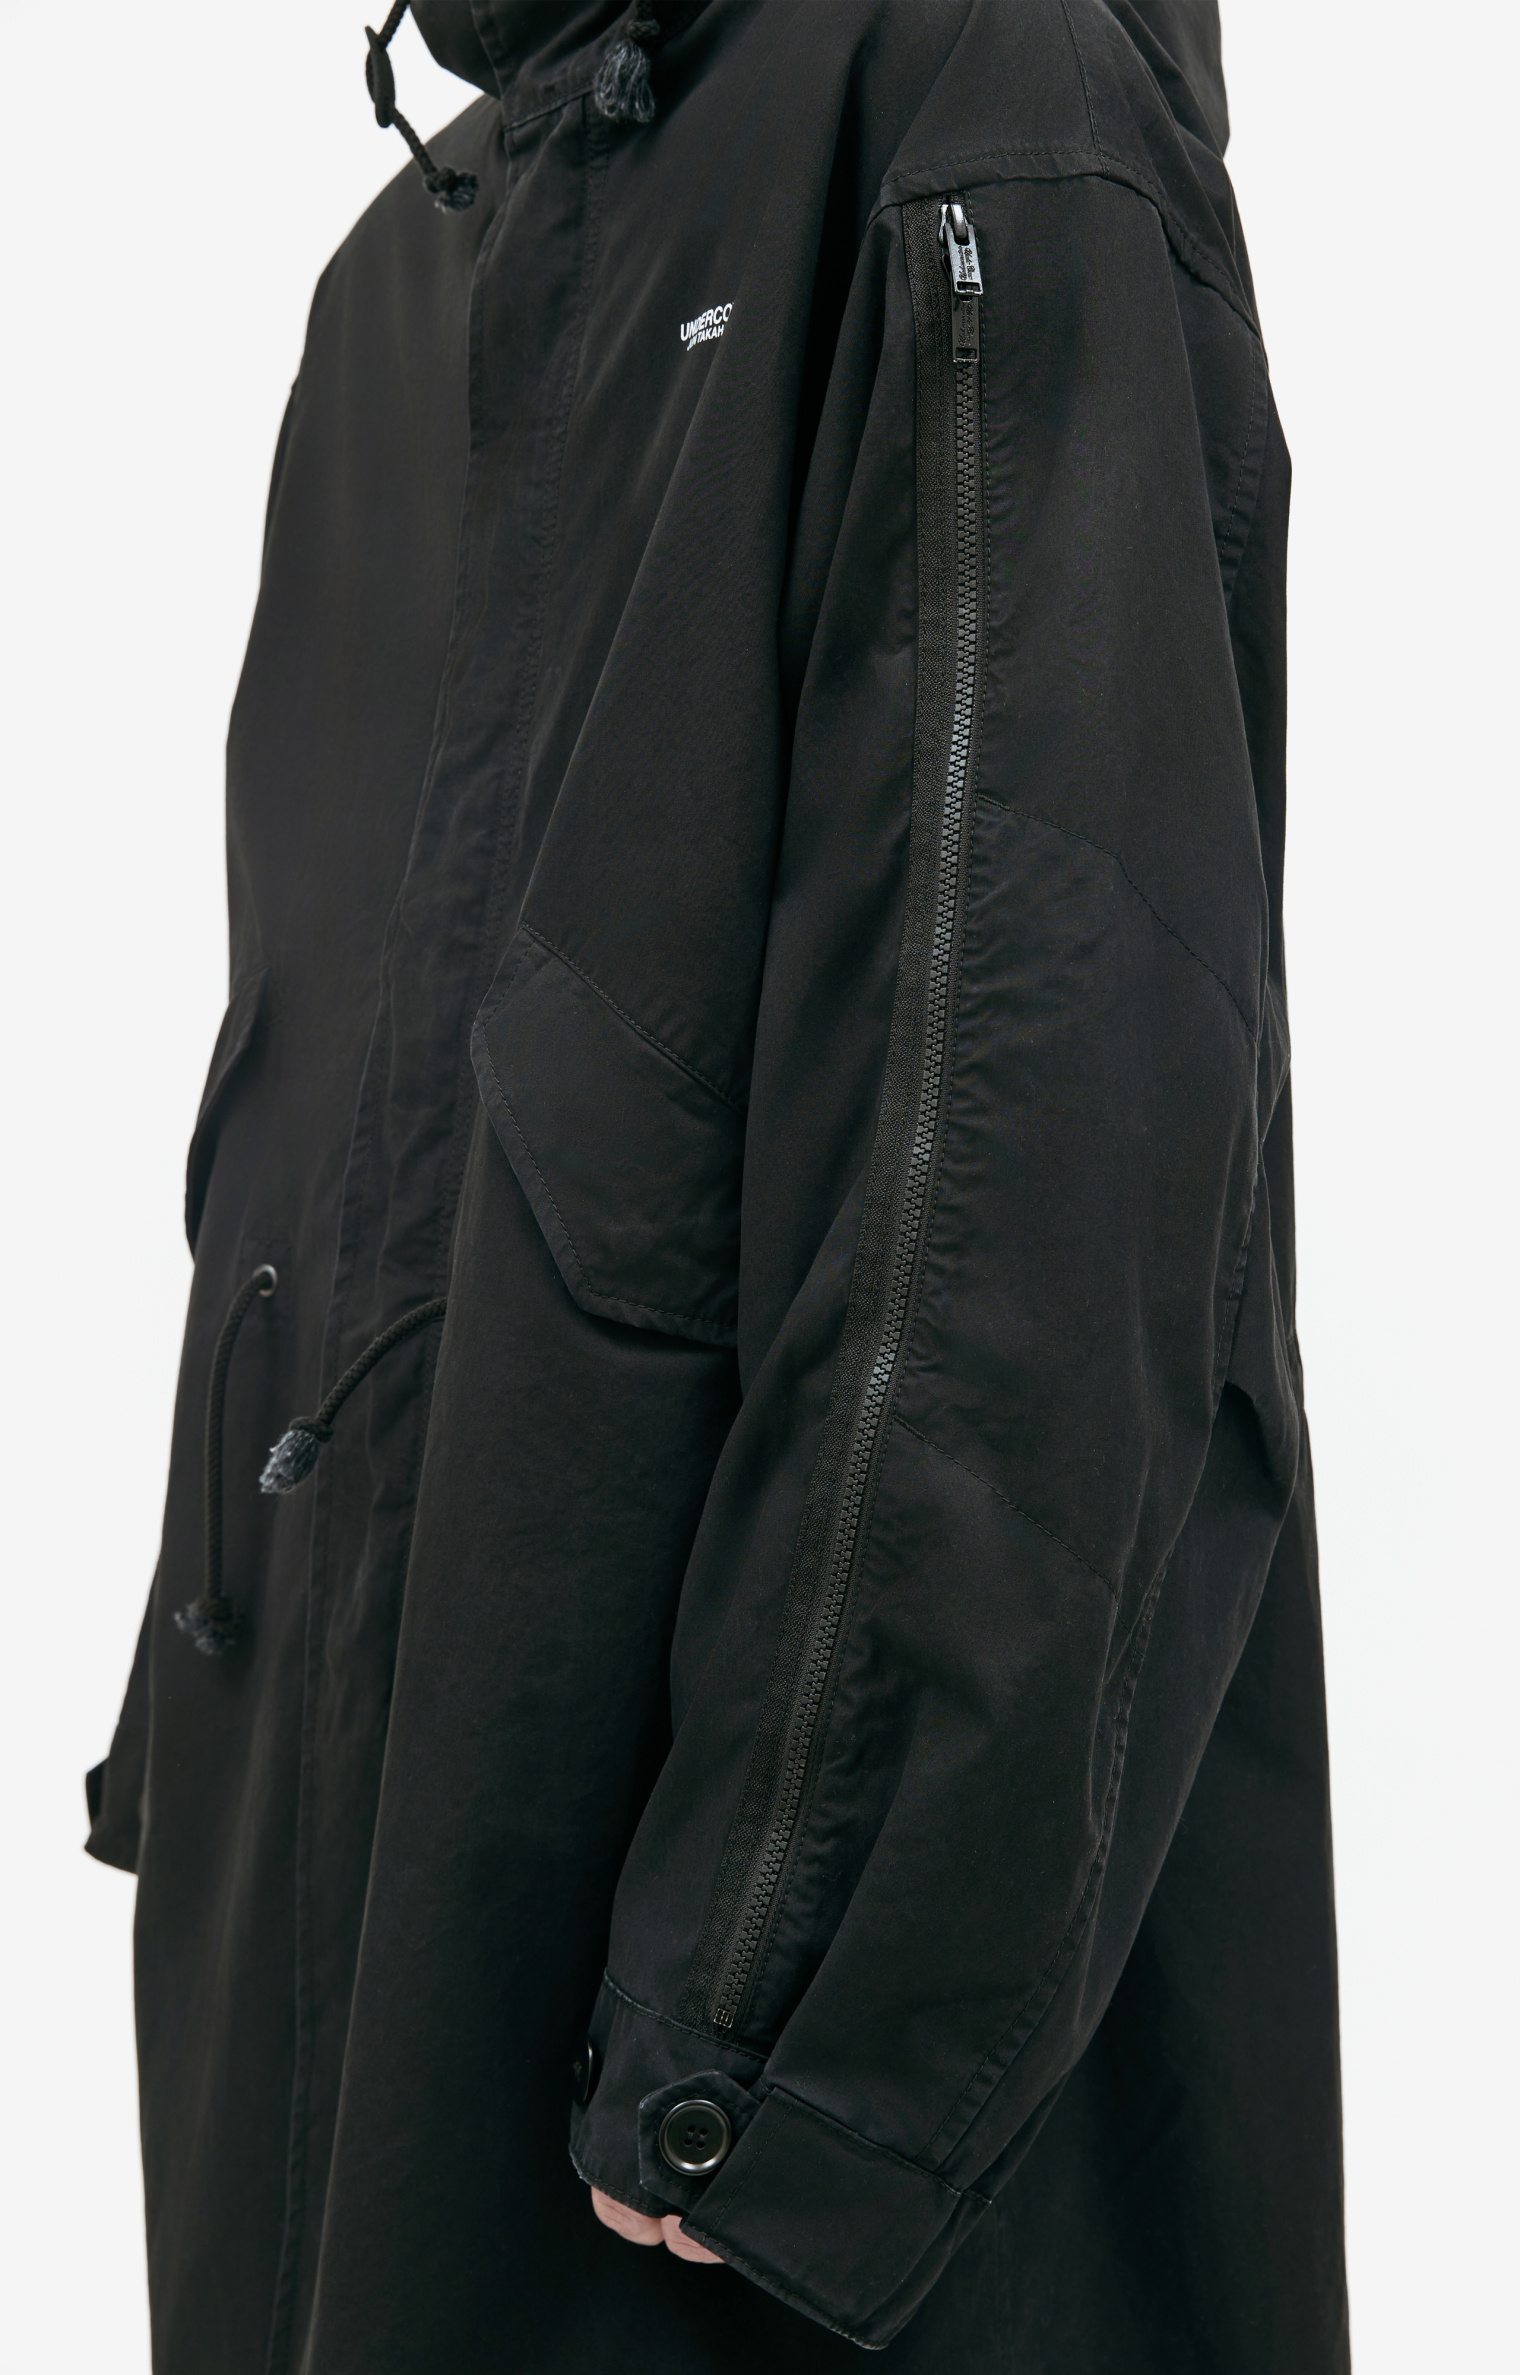 Undercover Black Printed Coat